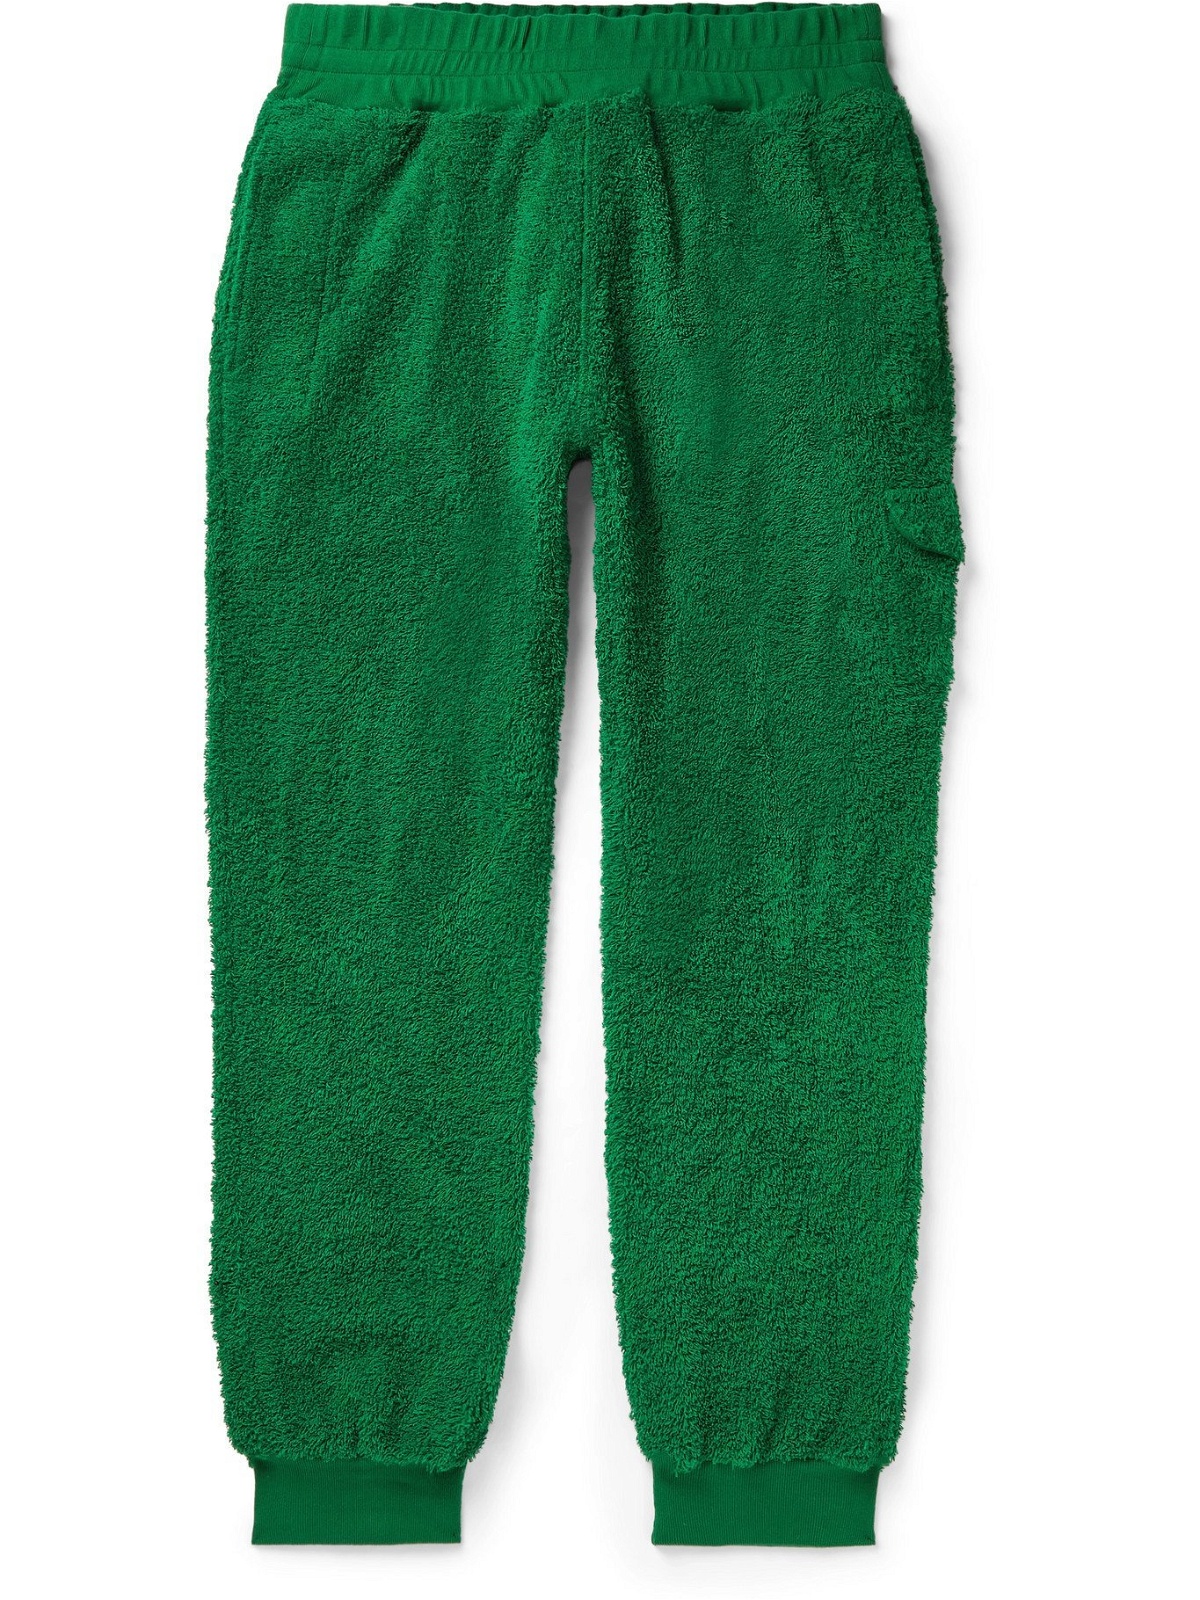 UNDERCOVER - Tapered Cotton-Fleece Cargo Sweatpants - Green Undercover